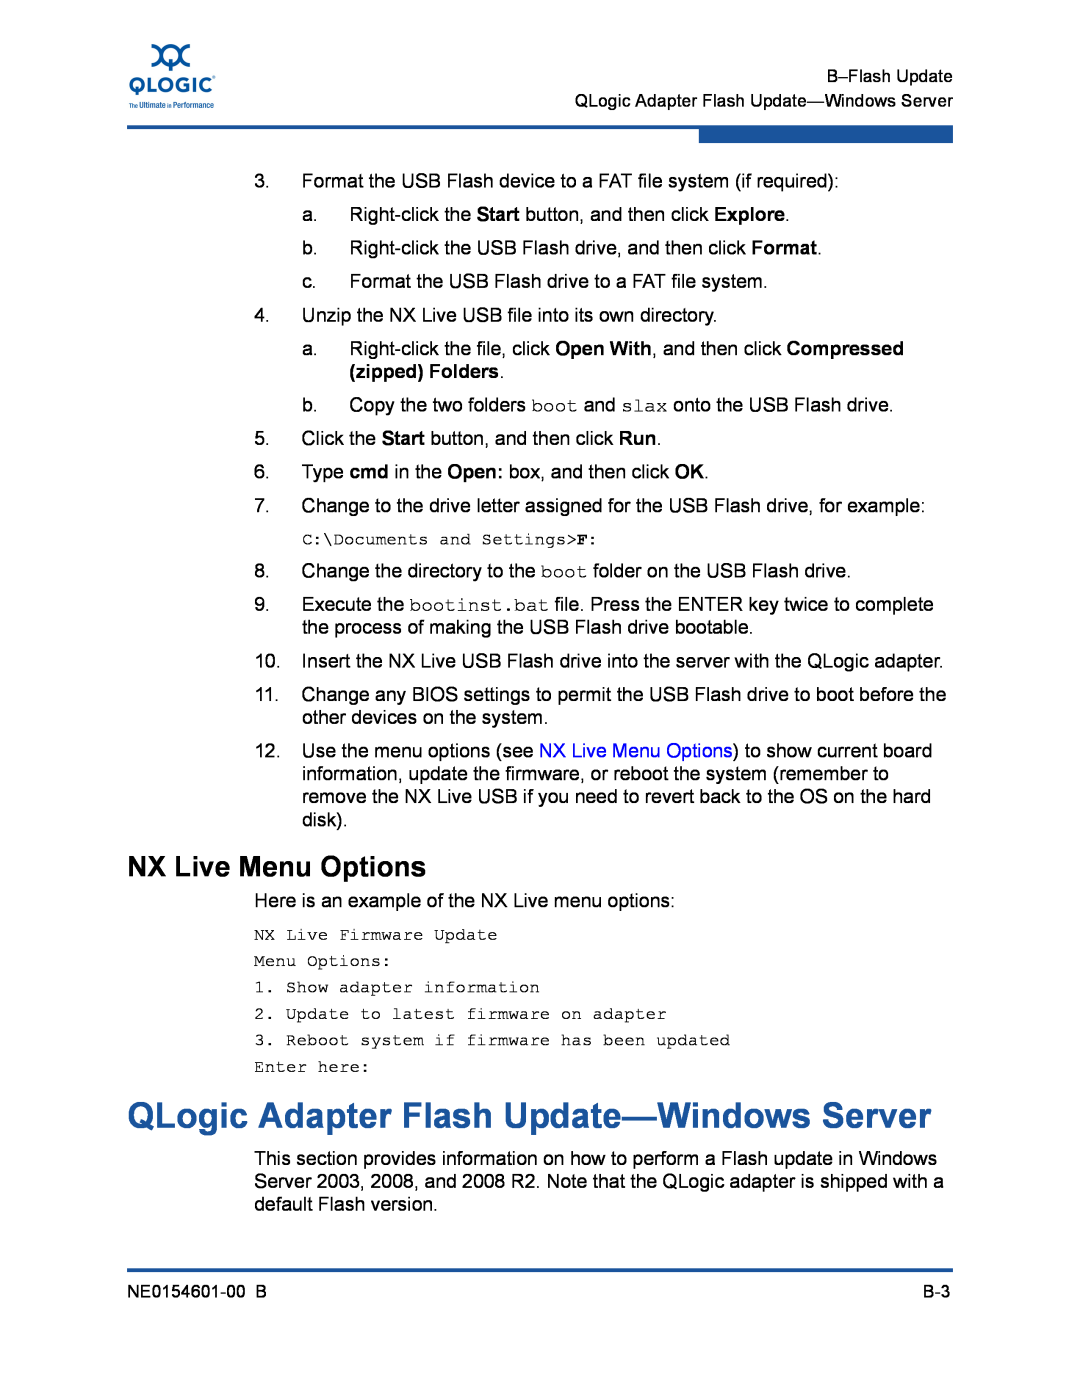 Q-Logic 3000, 3100 manual QLogic Adapter Flash Update-Windows Server, NX Live Menu Options 